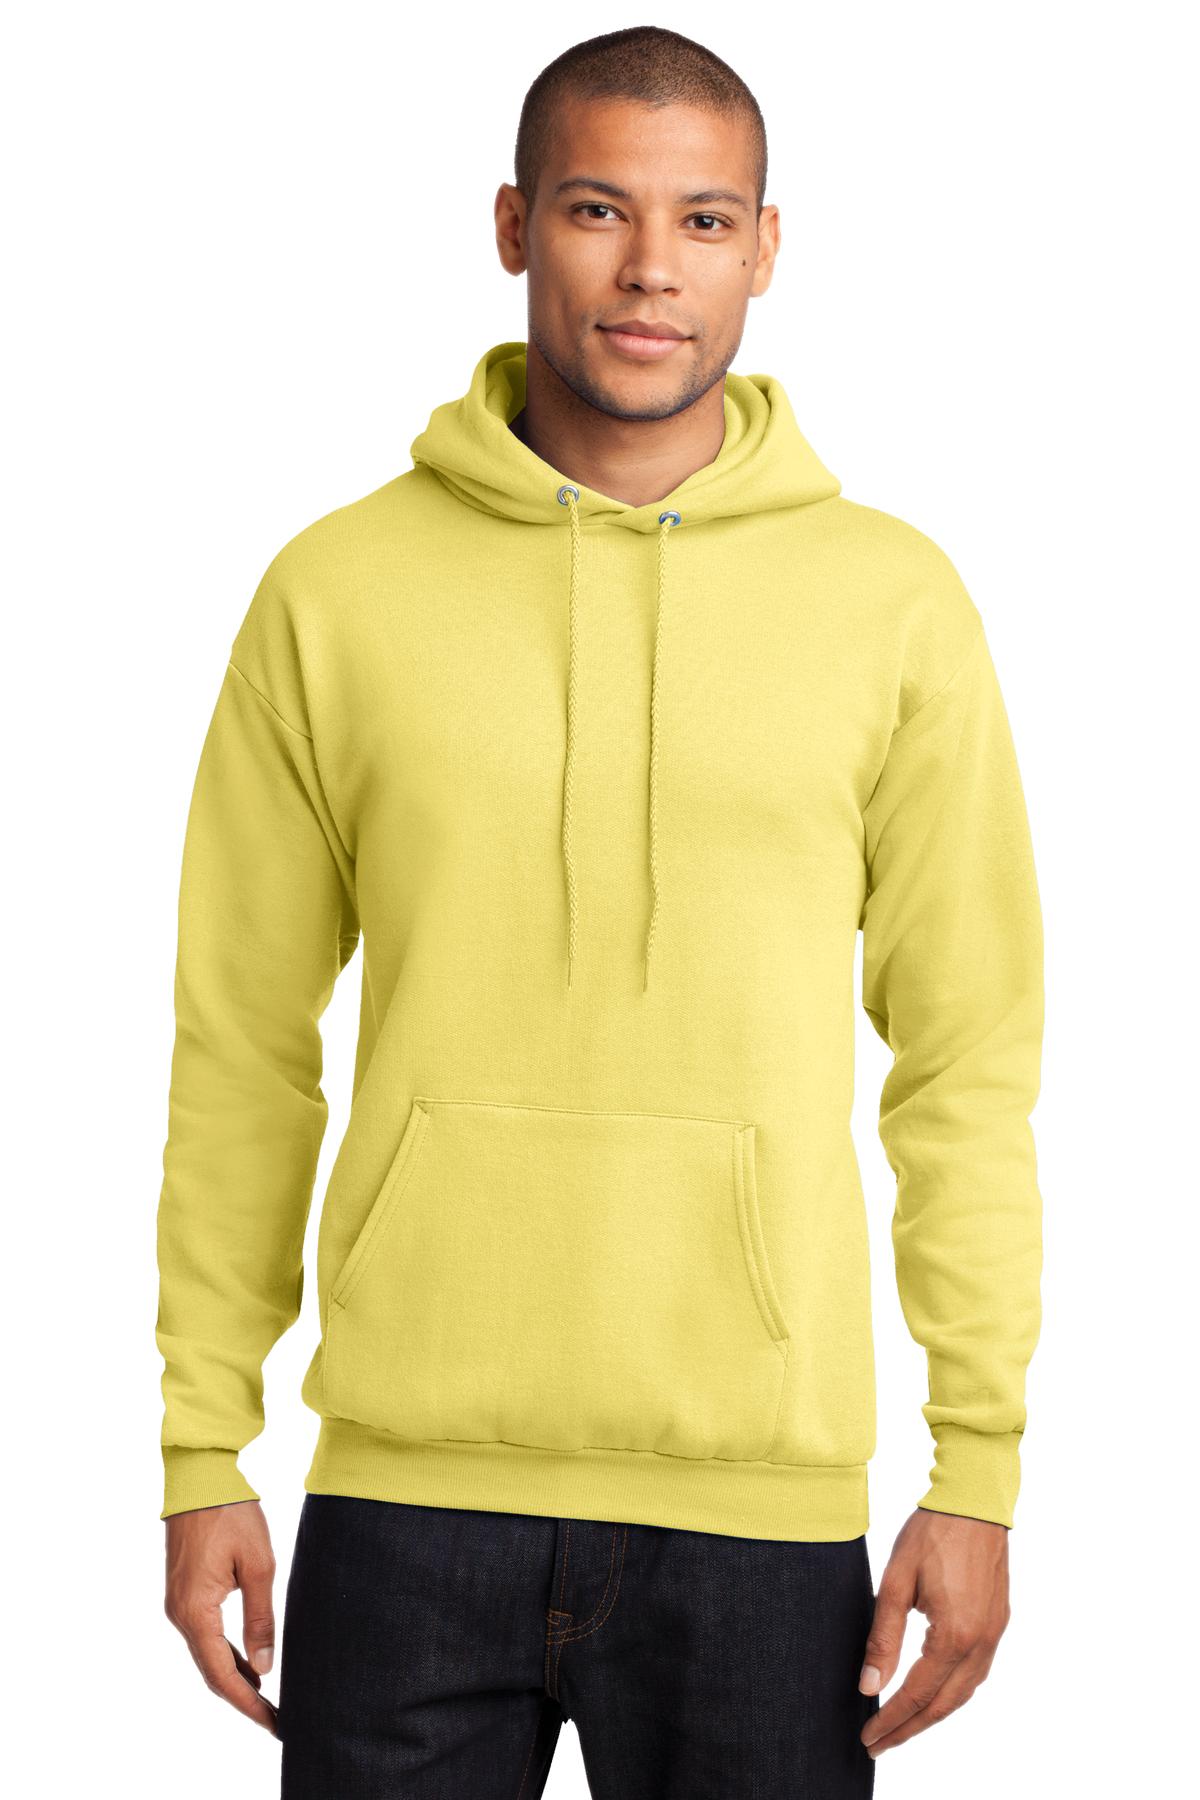 Port & Company - Core Fleece Pullover Hooded Sweatshirt. PC78H - Yellow